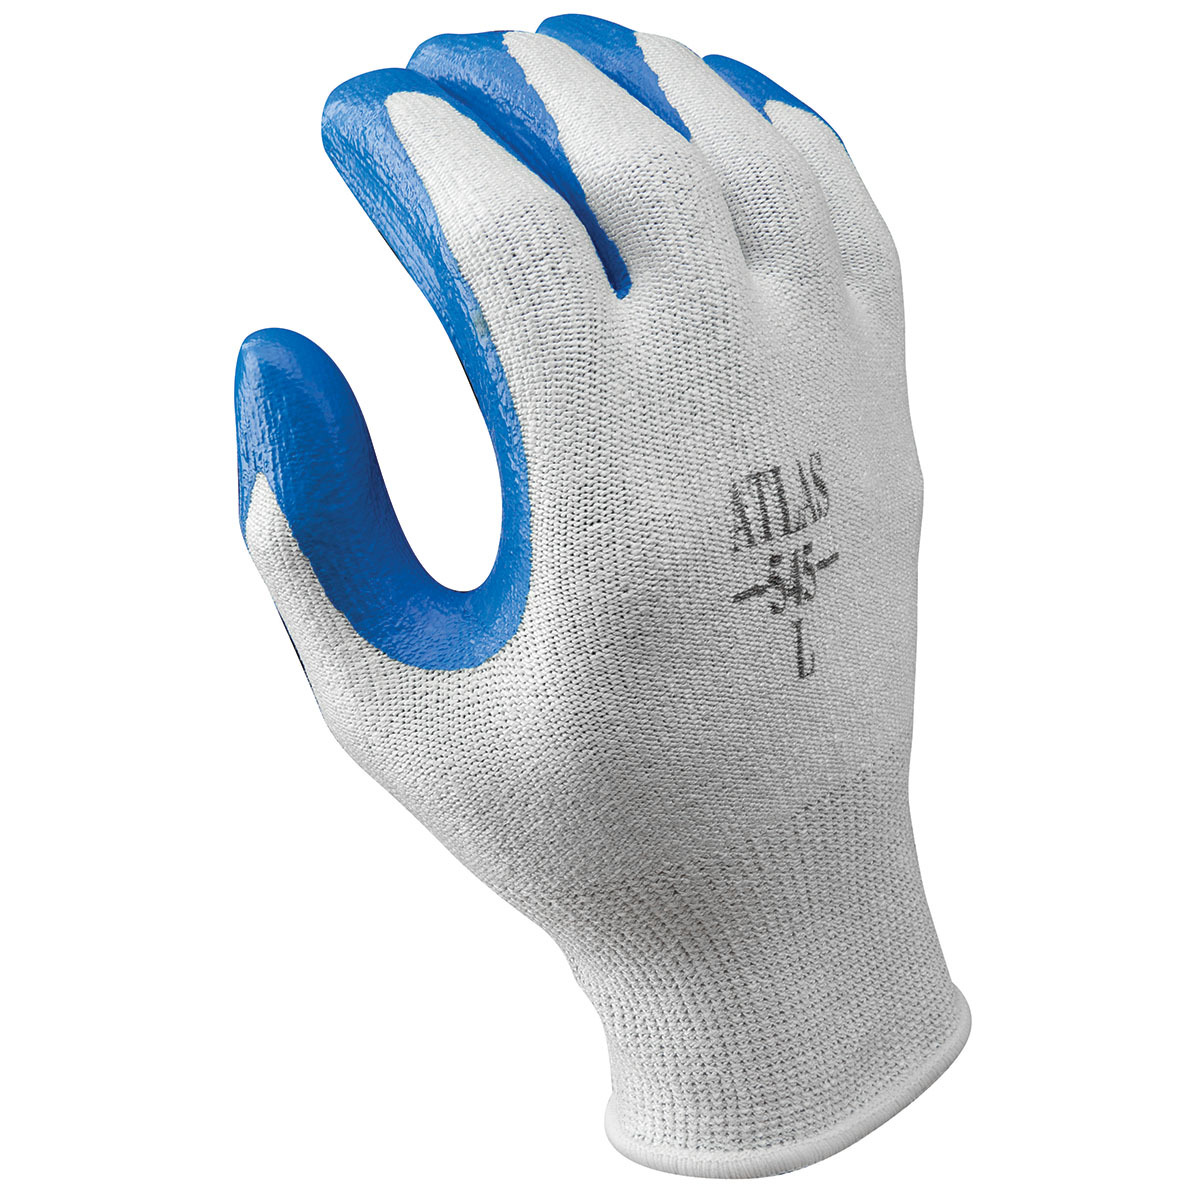 SHOWA® 545 13 Gauge High Performance Polyethylene Cut Resistant Gloves With Nitrile Coating